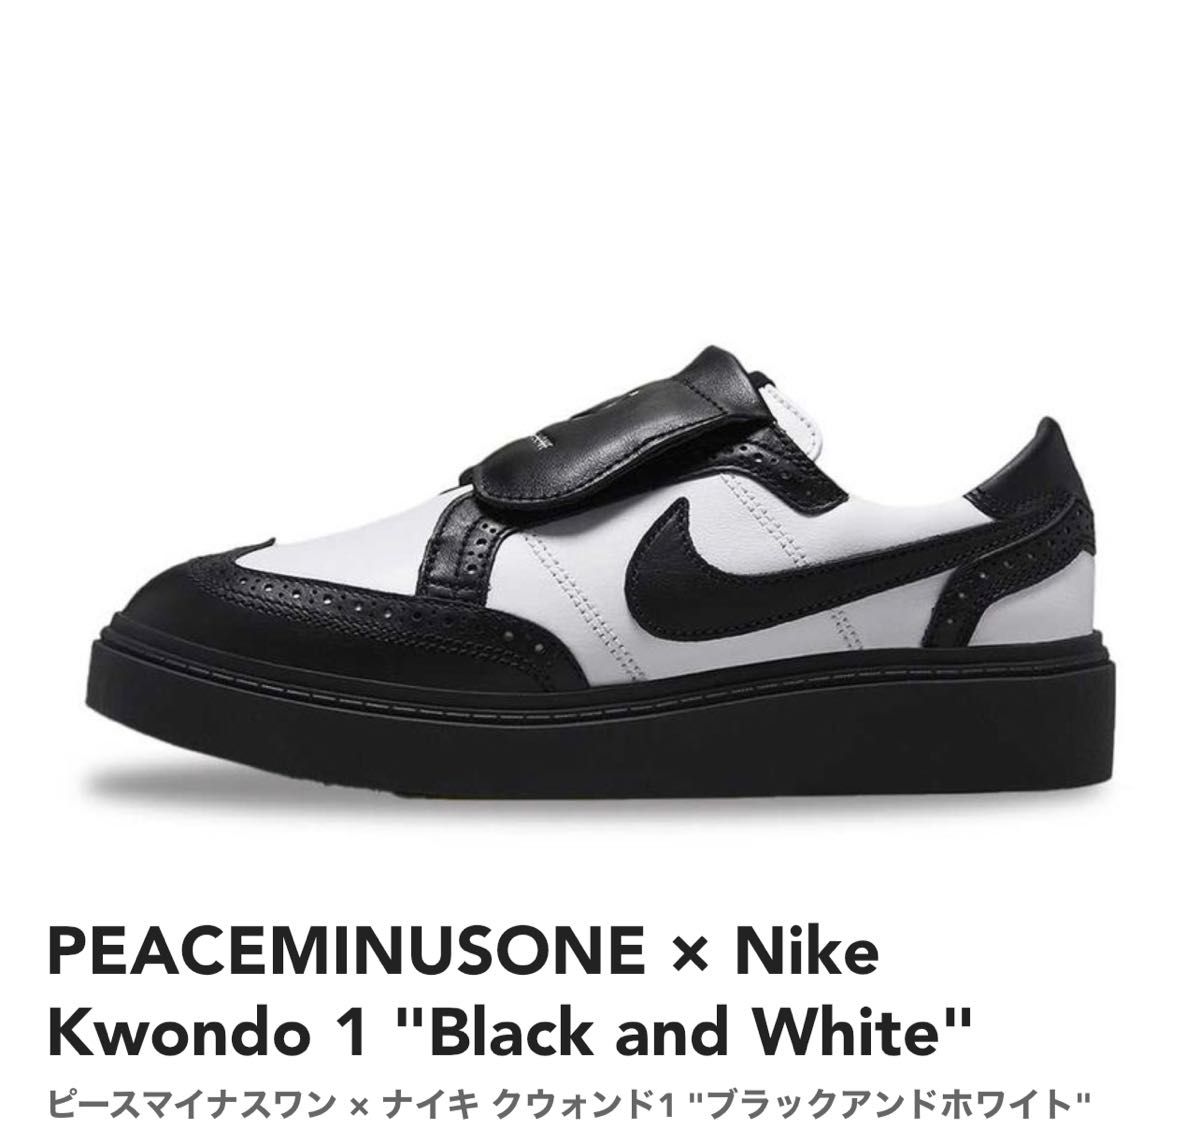 PEACEMINUSONE × Nike Kwondo 1 "Black and White"